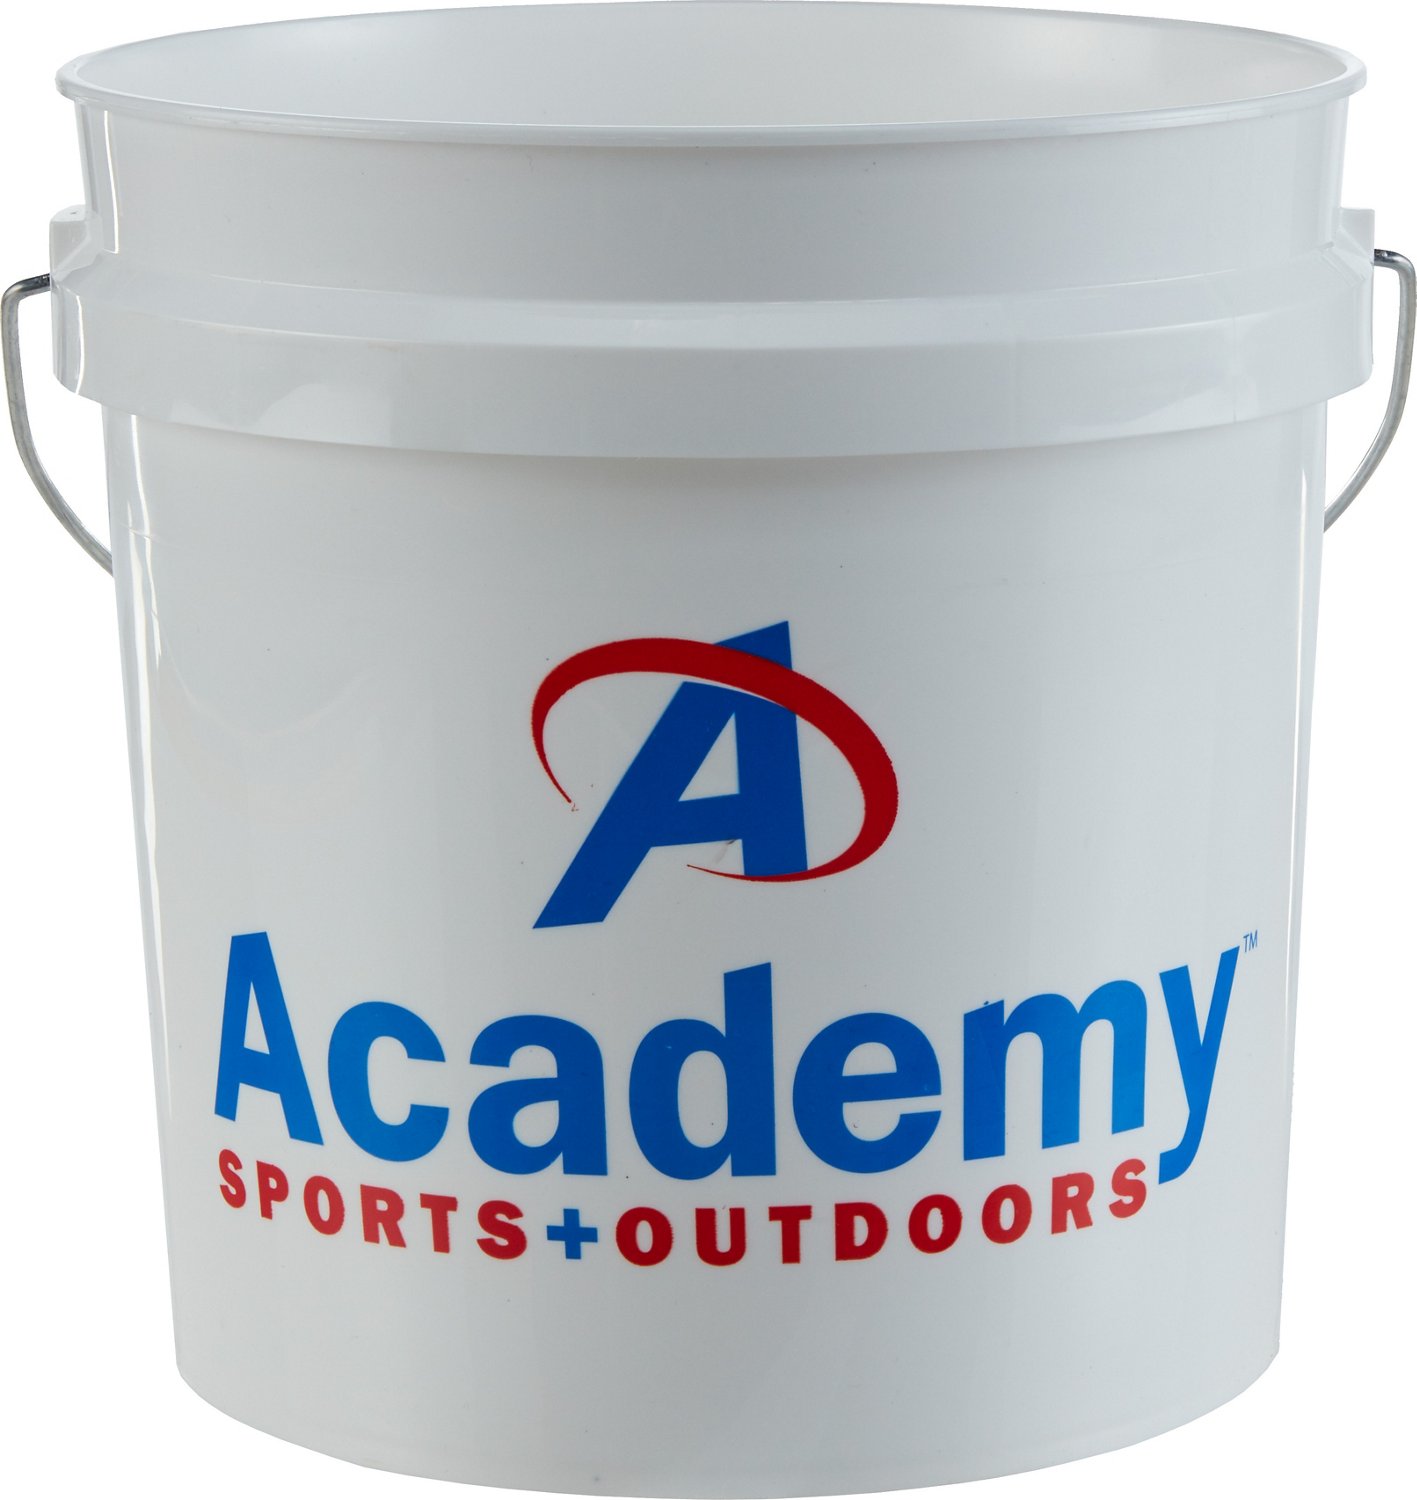 Academy Sports + Outdoors 2-Gallon Pail